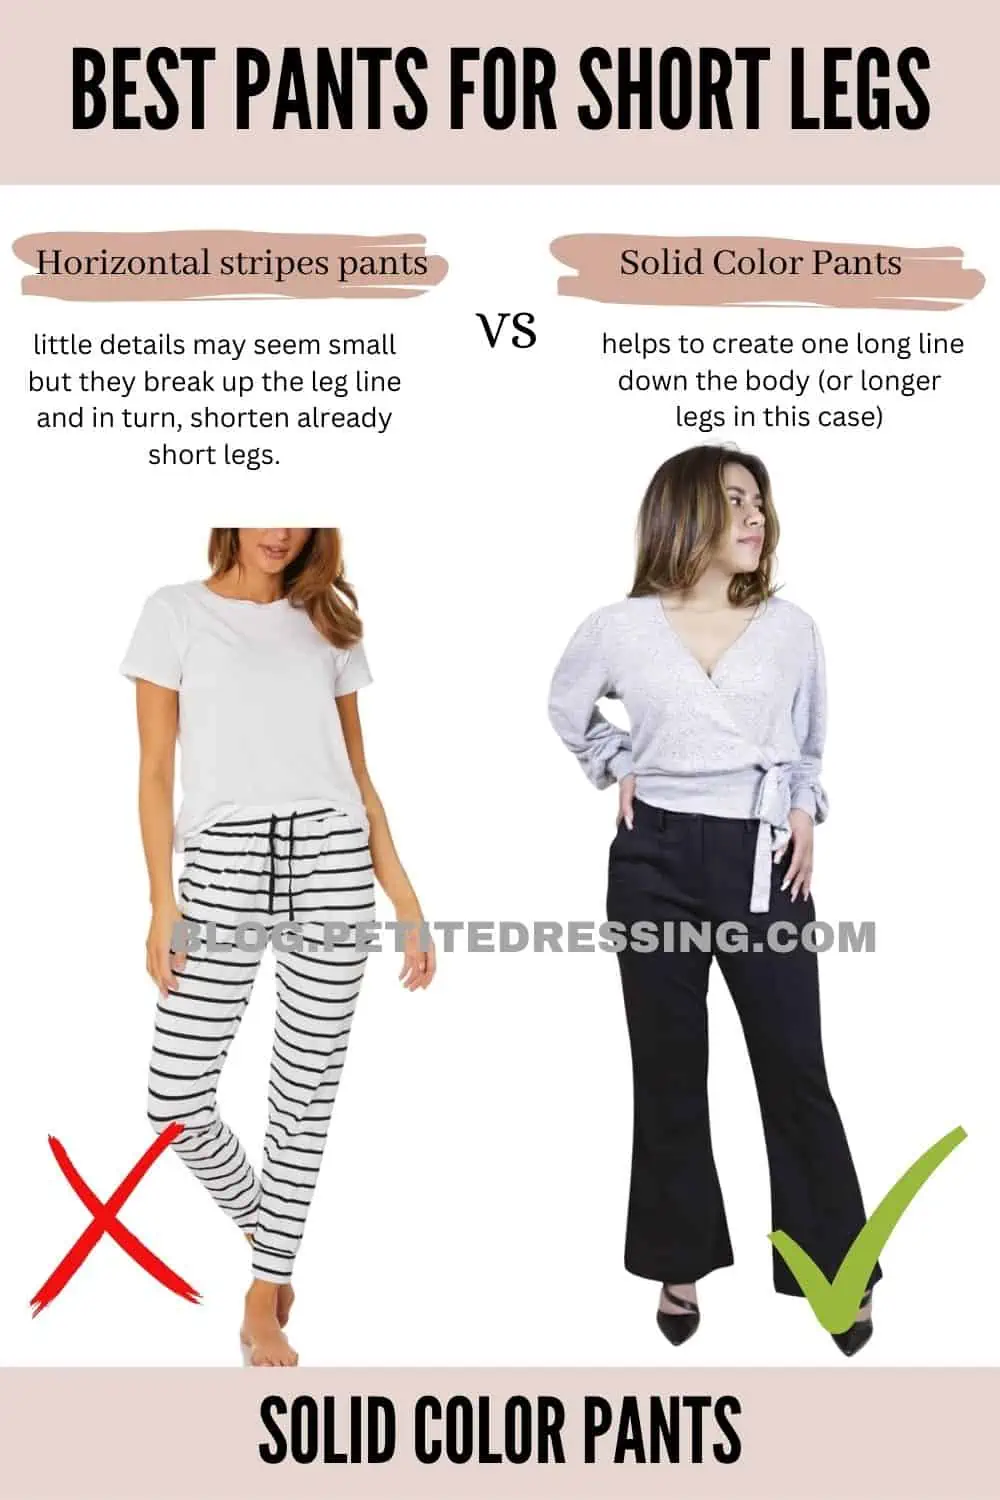 Best 10 Trendy Jeans Suggestions for Short Women - Styl Inc